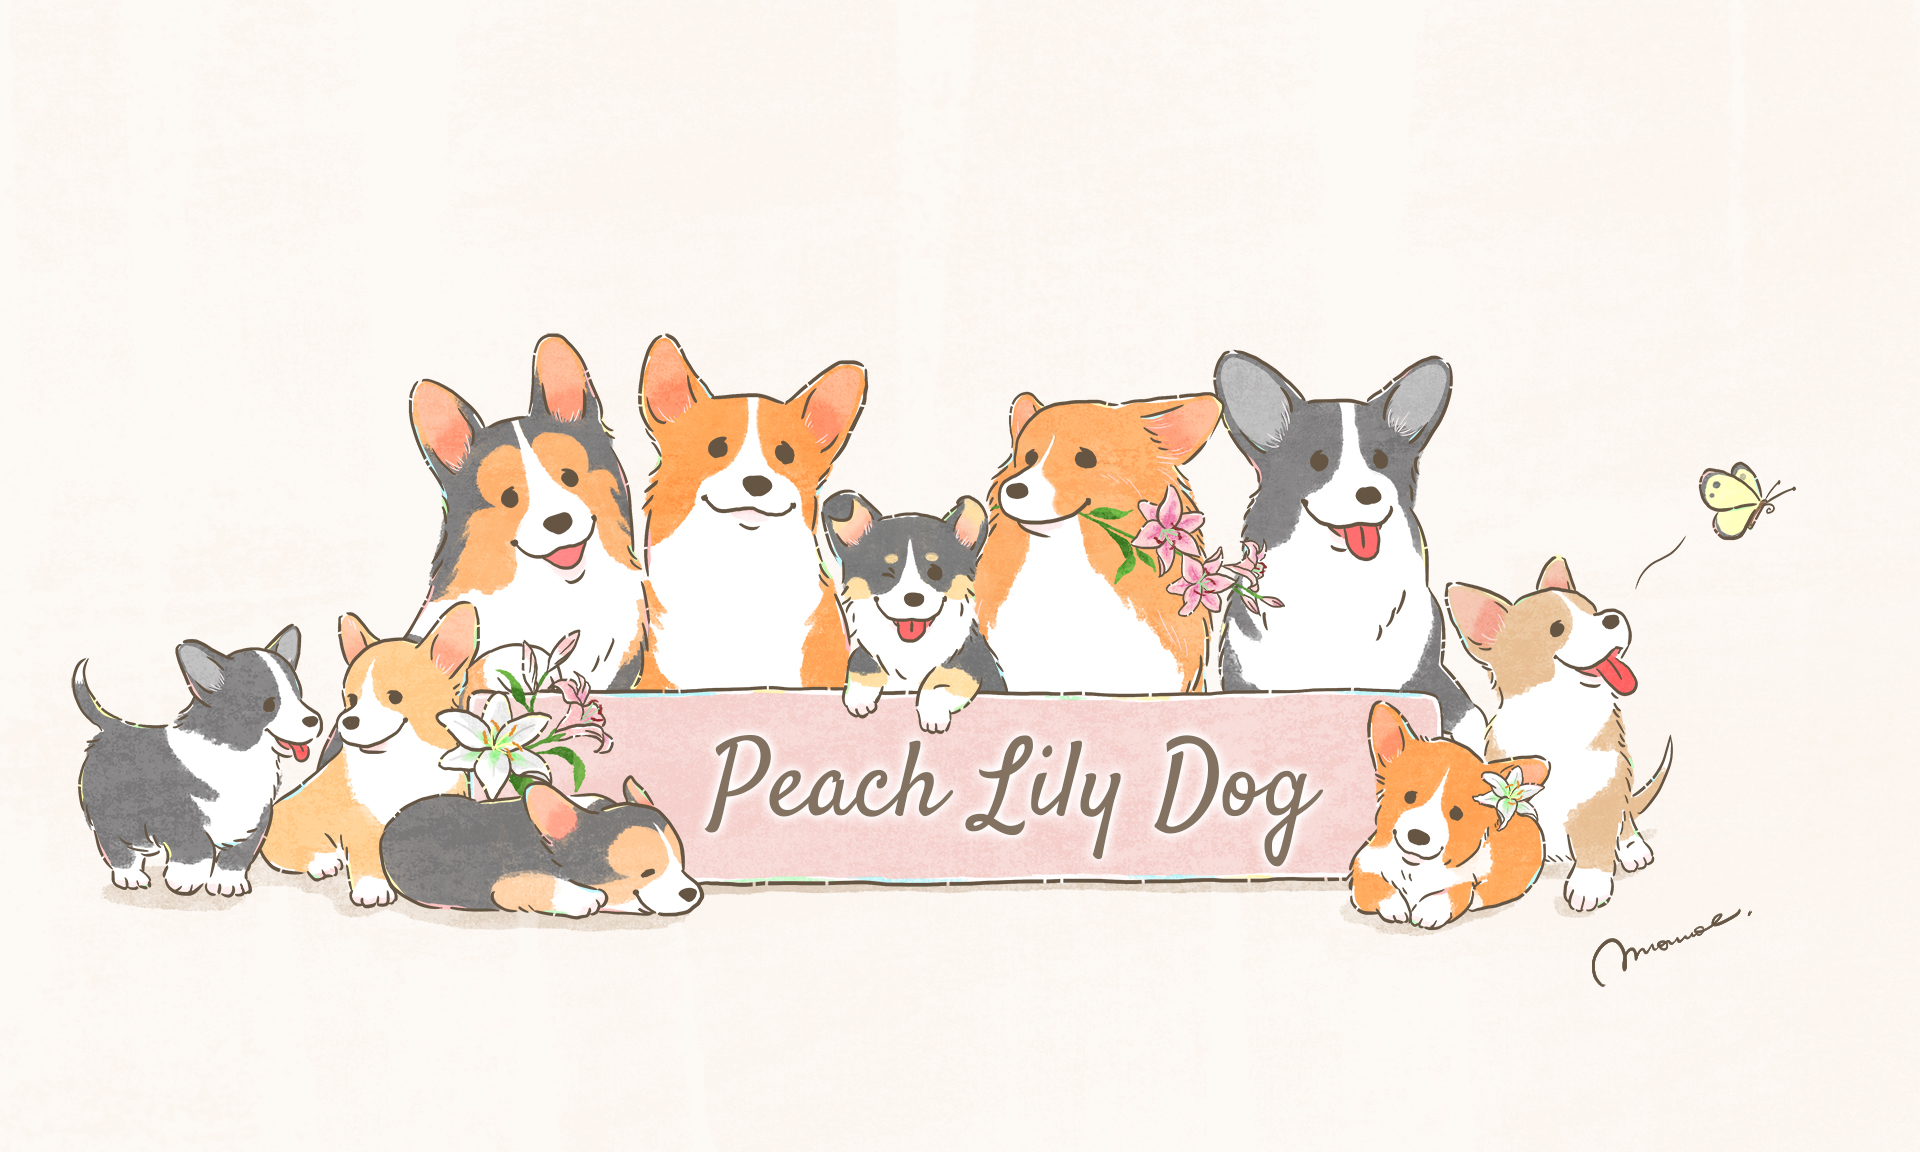 Peach Lily Dogがパーフェクションを選んだ理由